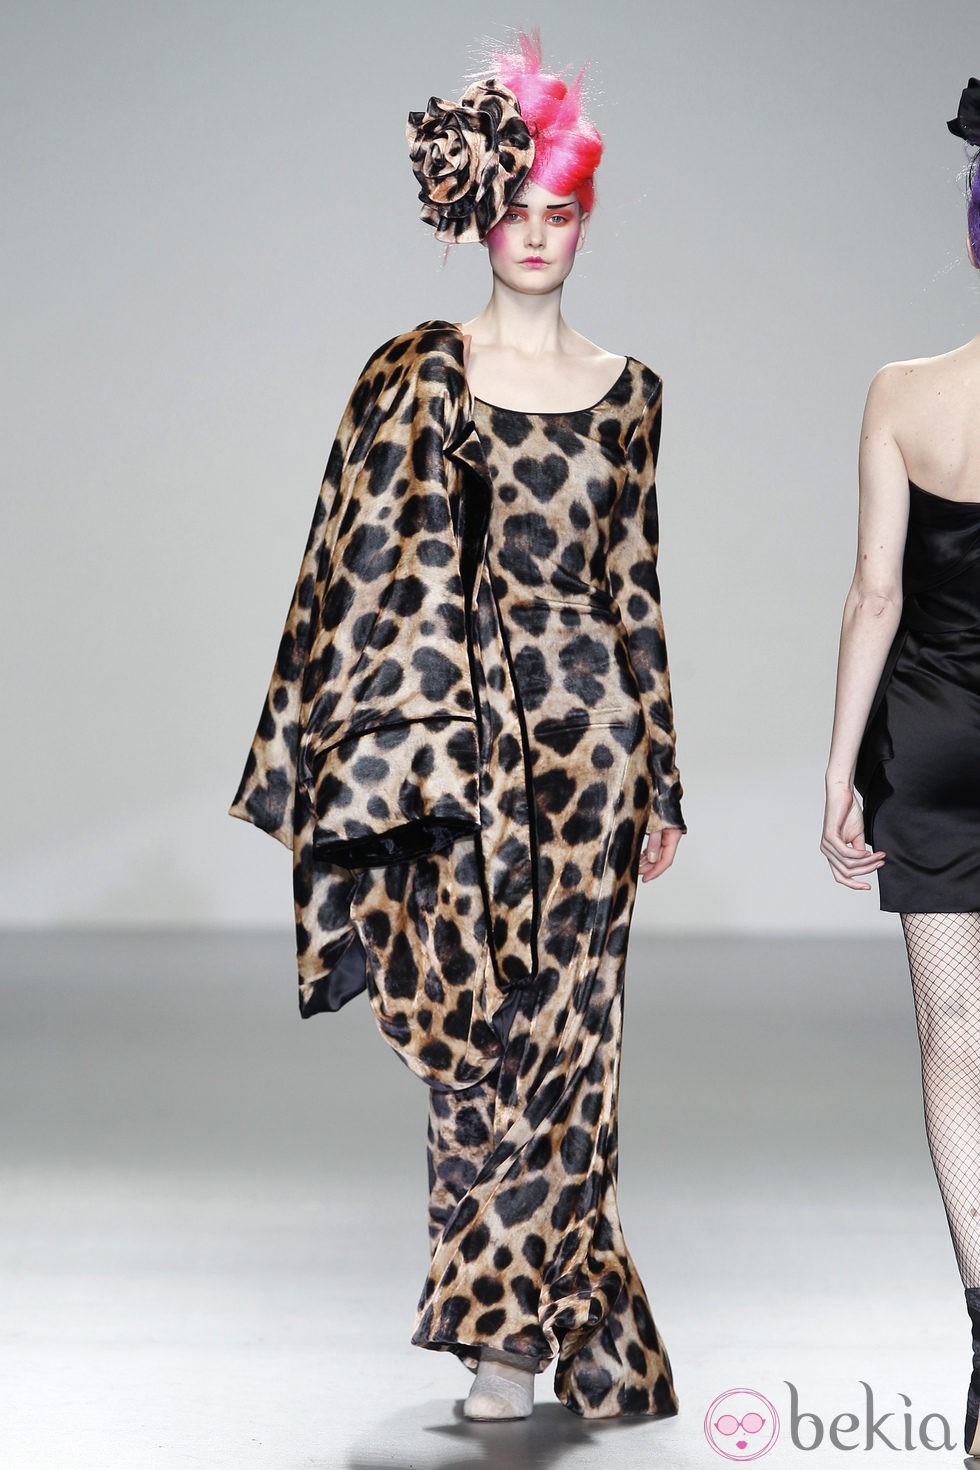 Vestido con animal print de Elisa Palomino en la Madrid Fashion Week